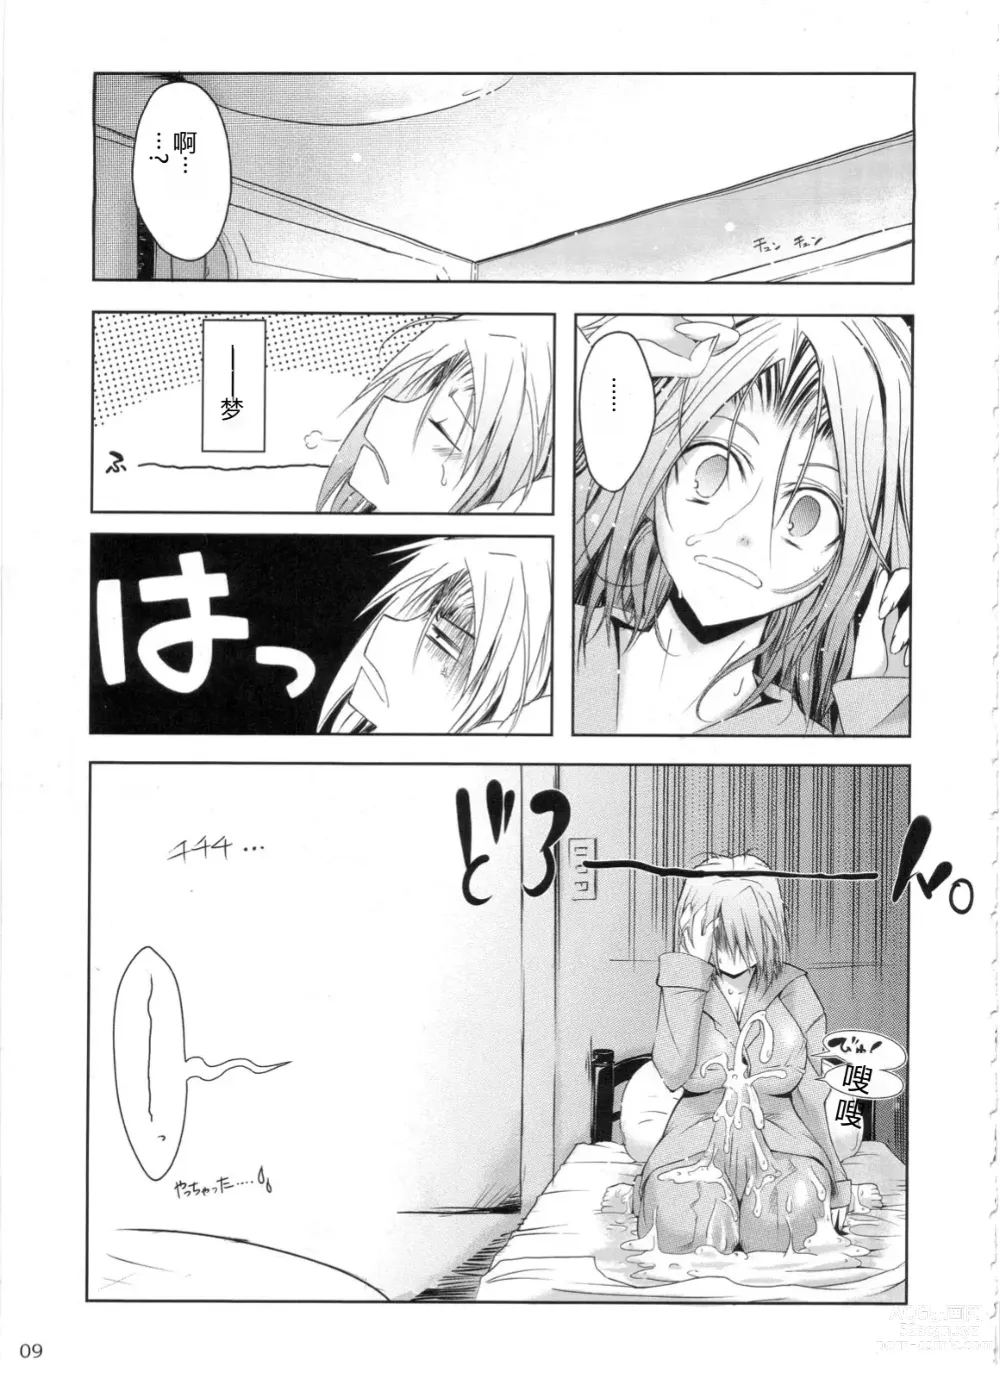 Page 8 of doujinshi Otome Byoutou